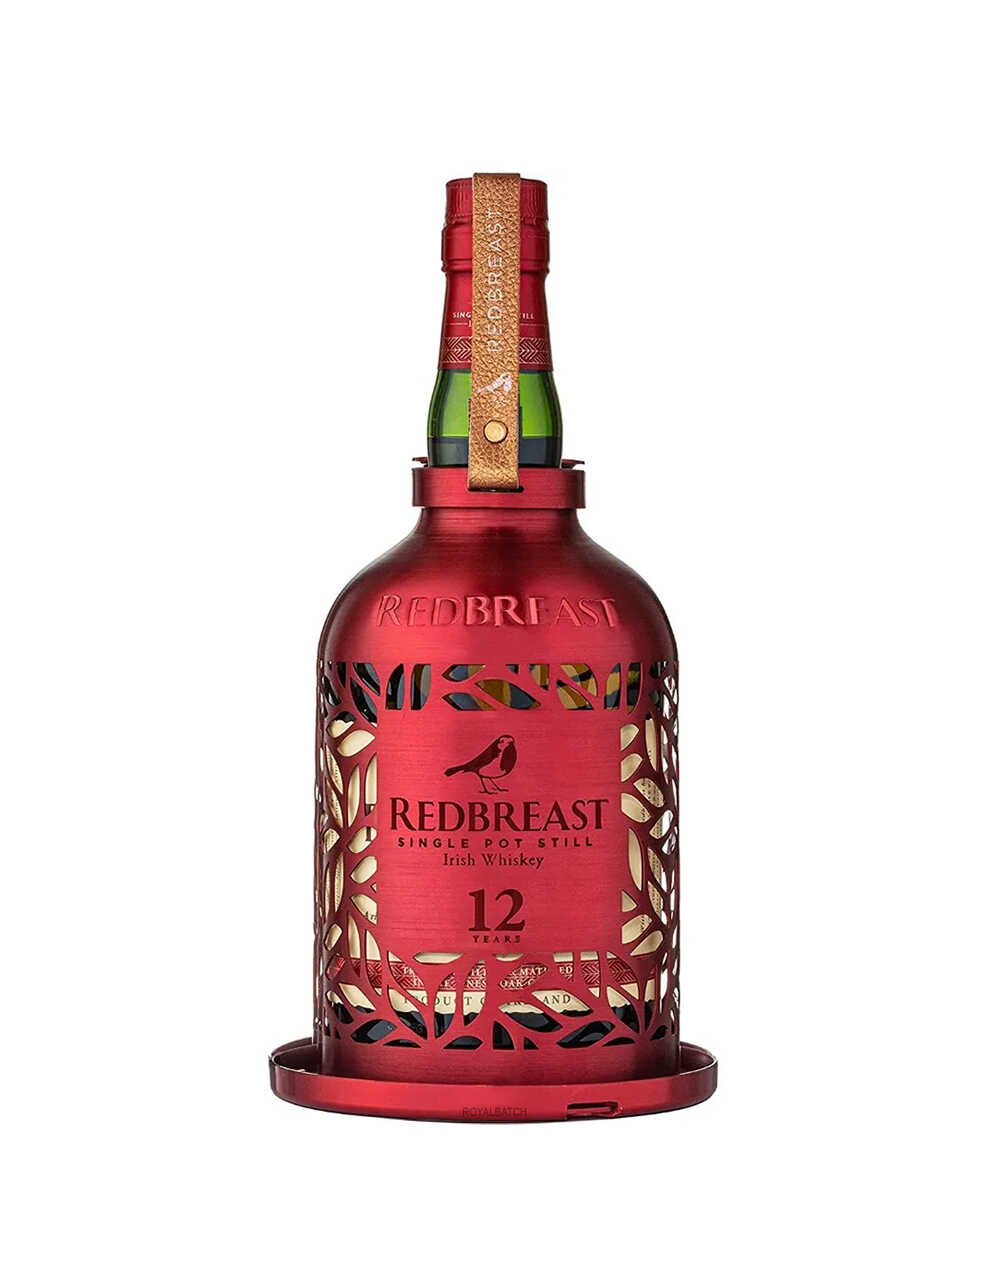 Redbreast 12 Year Bird Feeder Limited Edition Single Pot Still Irish Whiskey